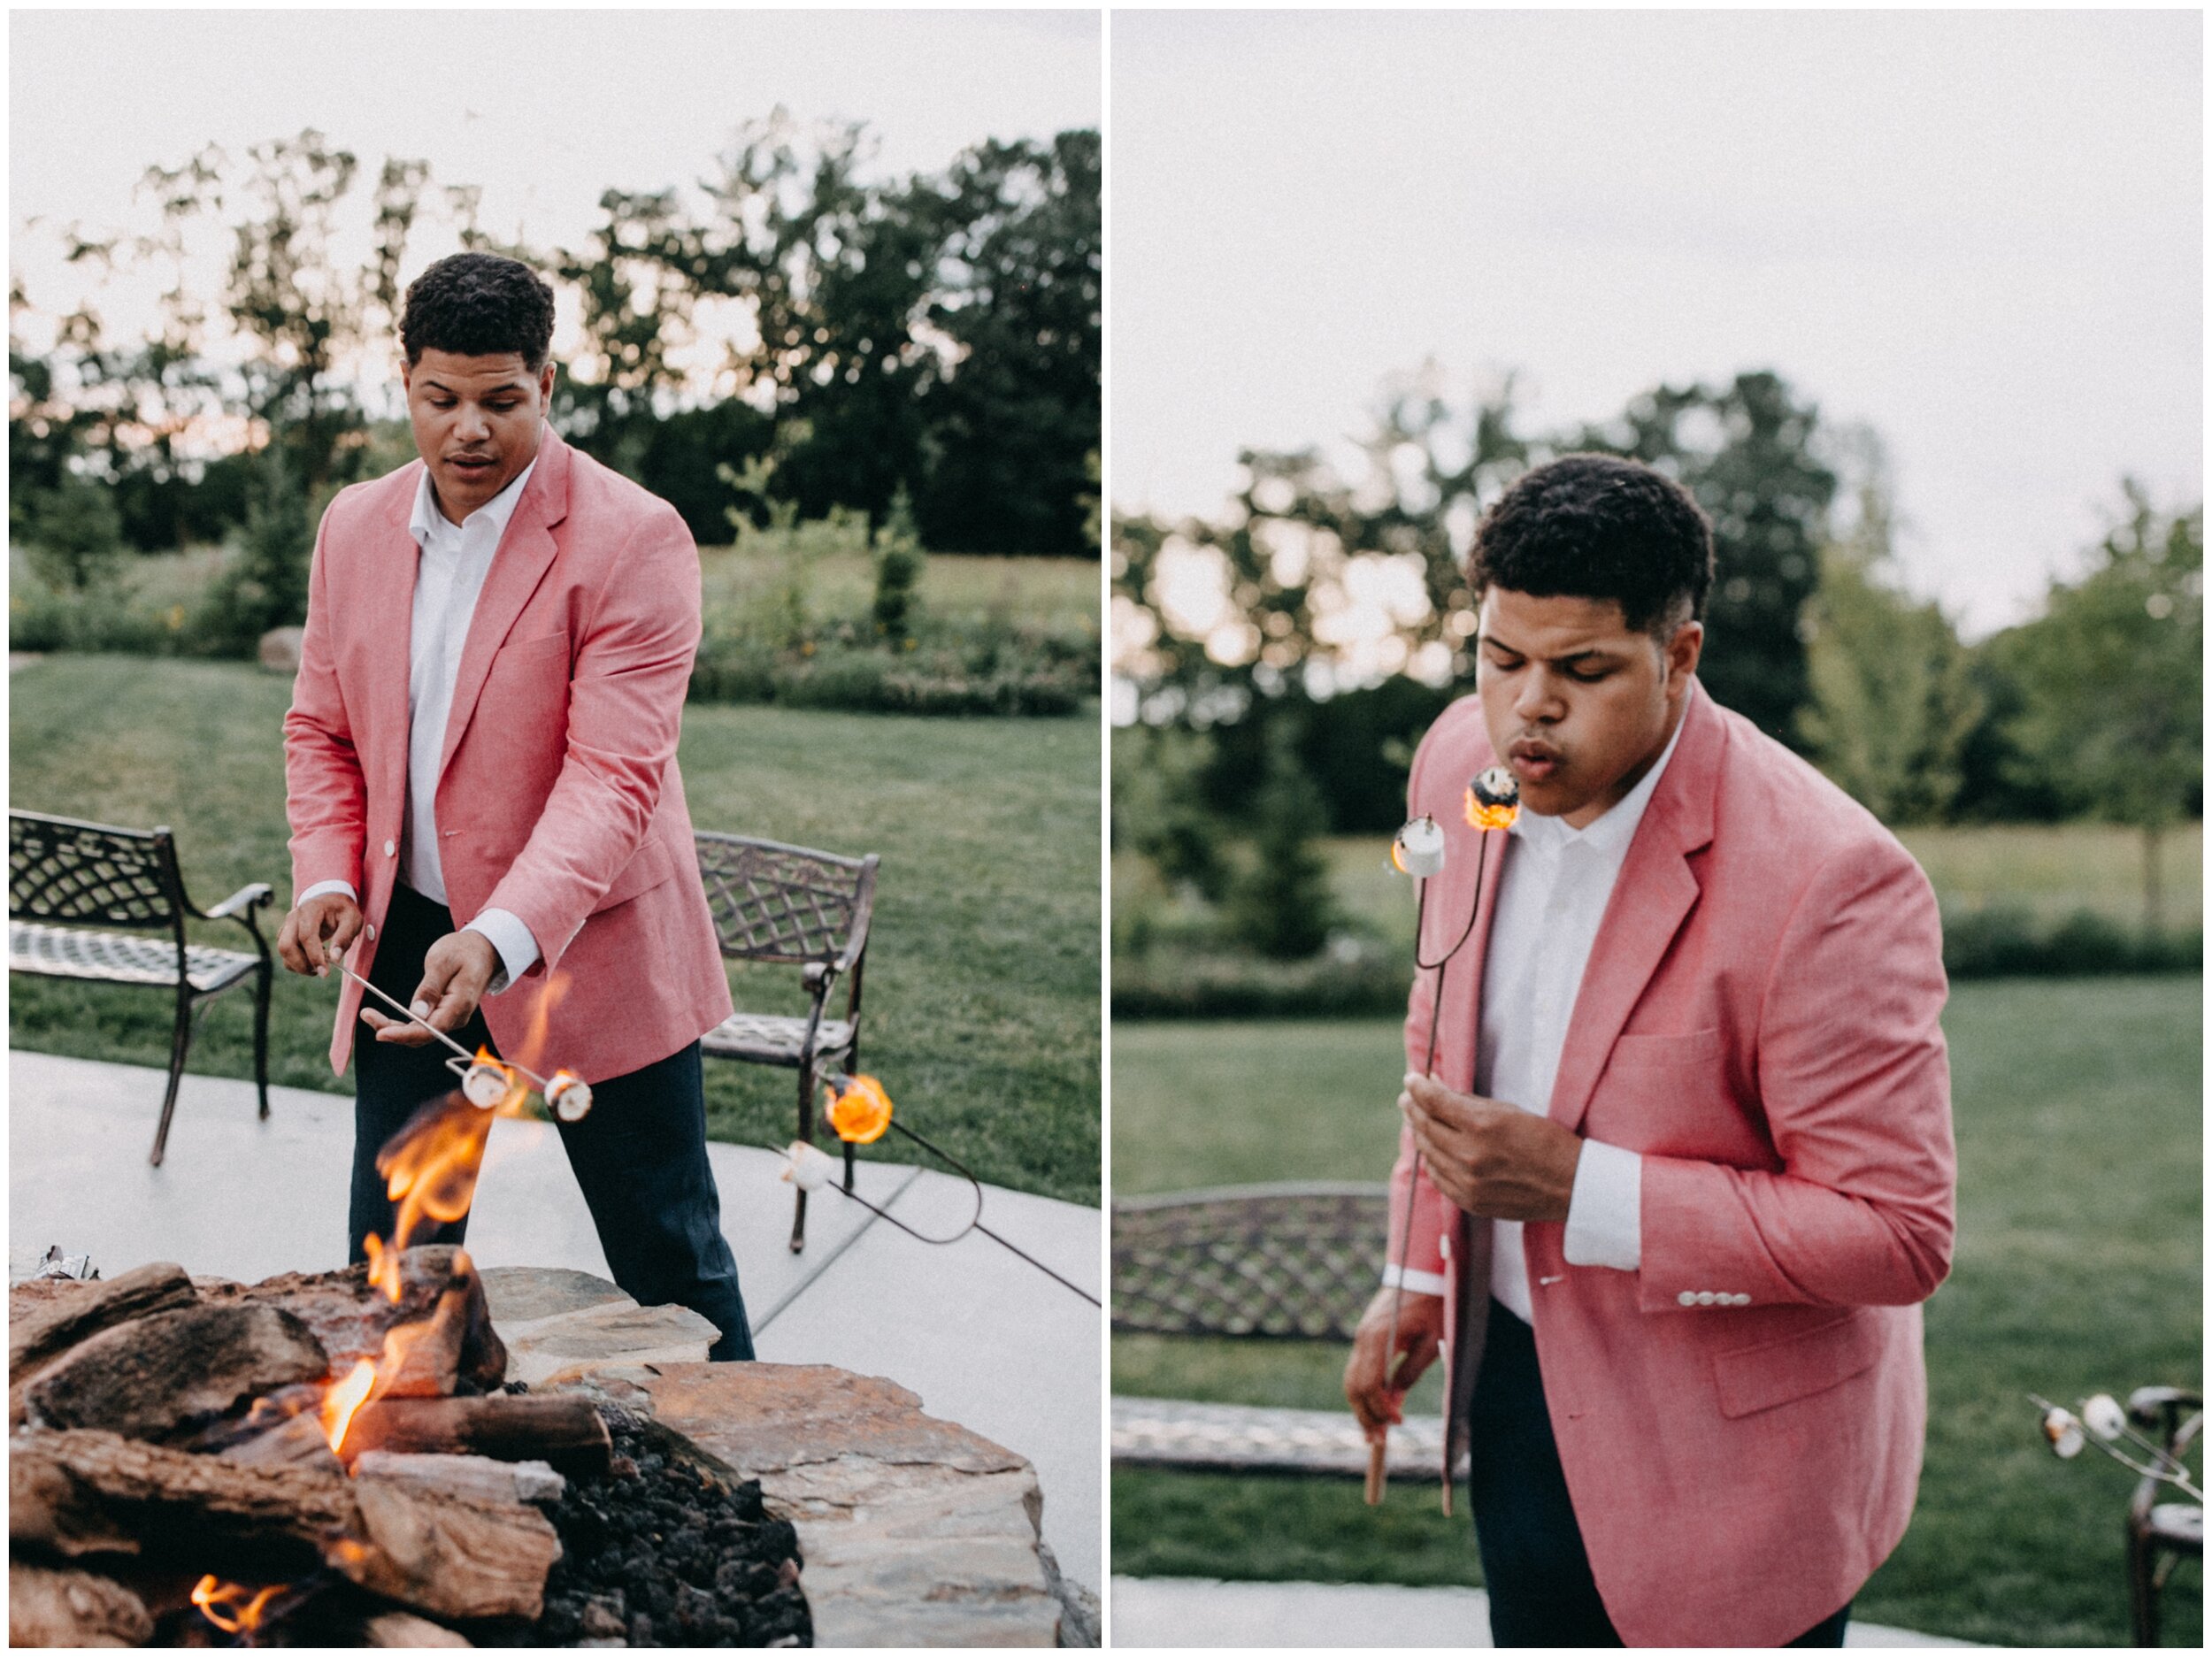 Guest roasting marshmallows at outdoor barn wedding reception